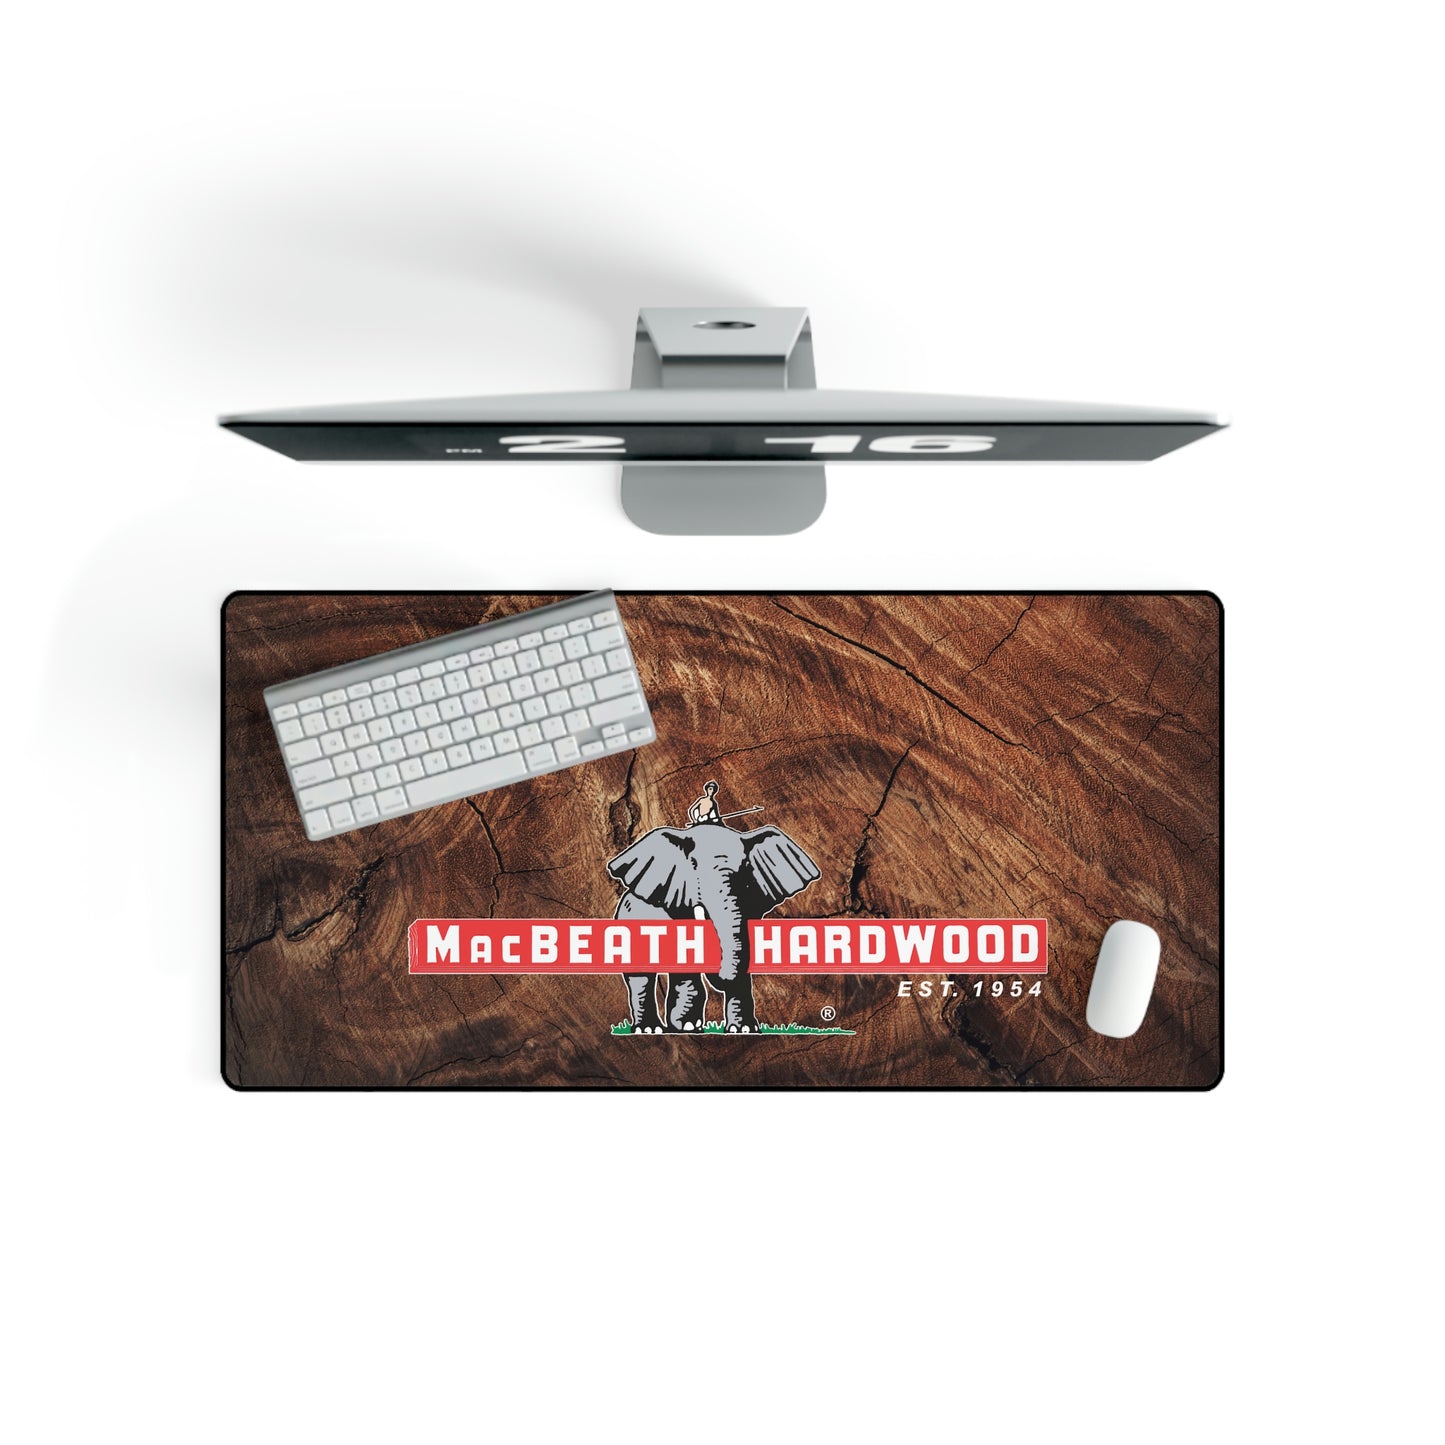 MacBeath Hardwood Desk Mat